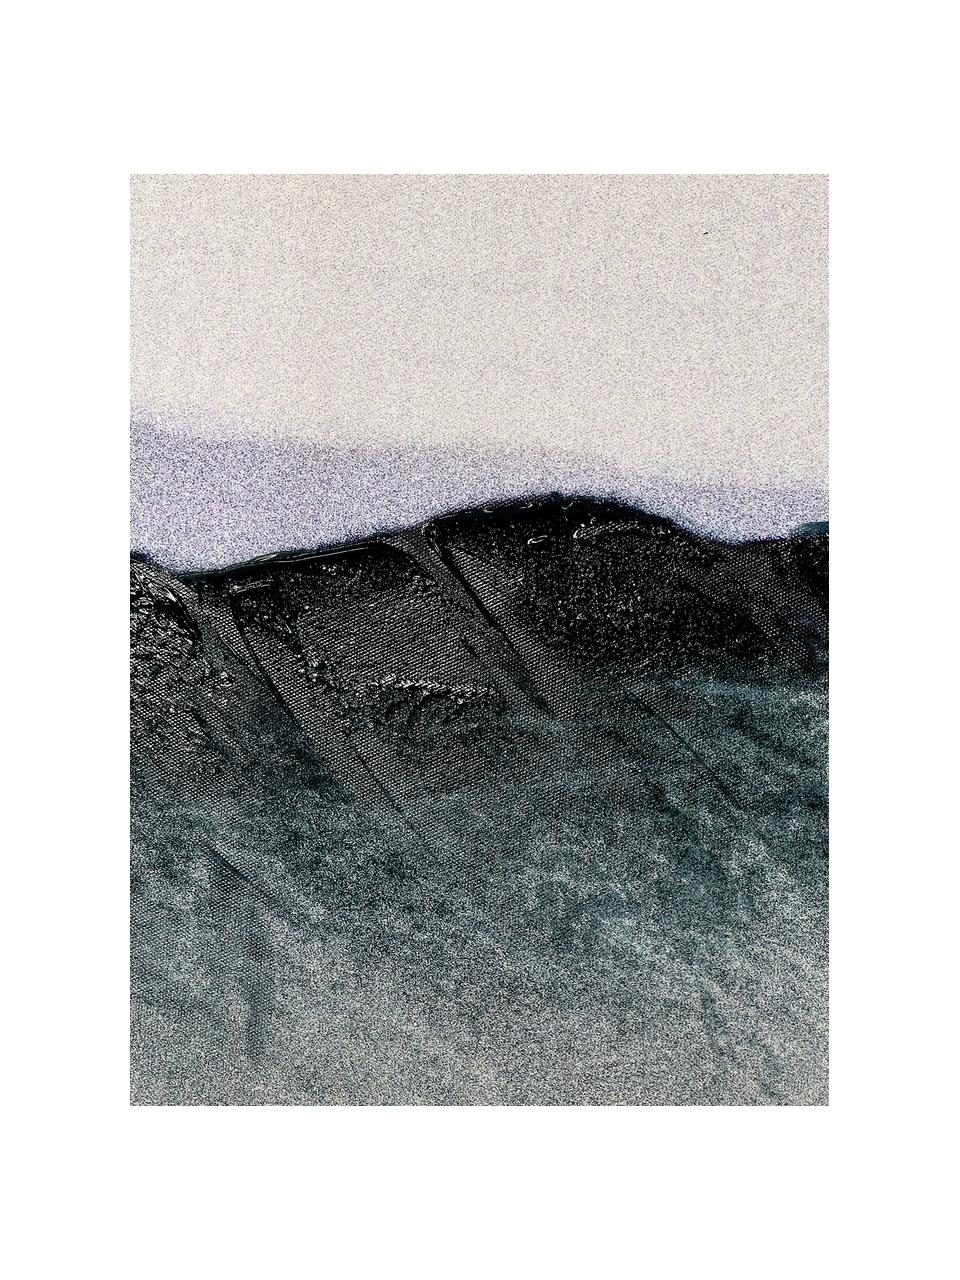 Tištěný malovaný obraz na plátně Duna, Bílá, černá, modrá, Š 140 cm, V 100 cm